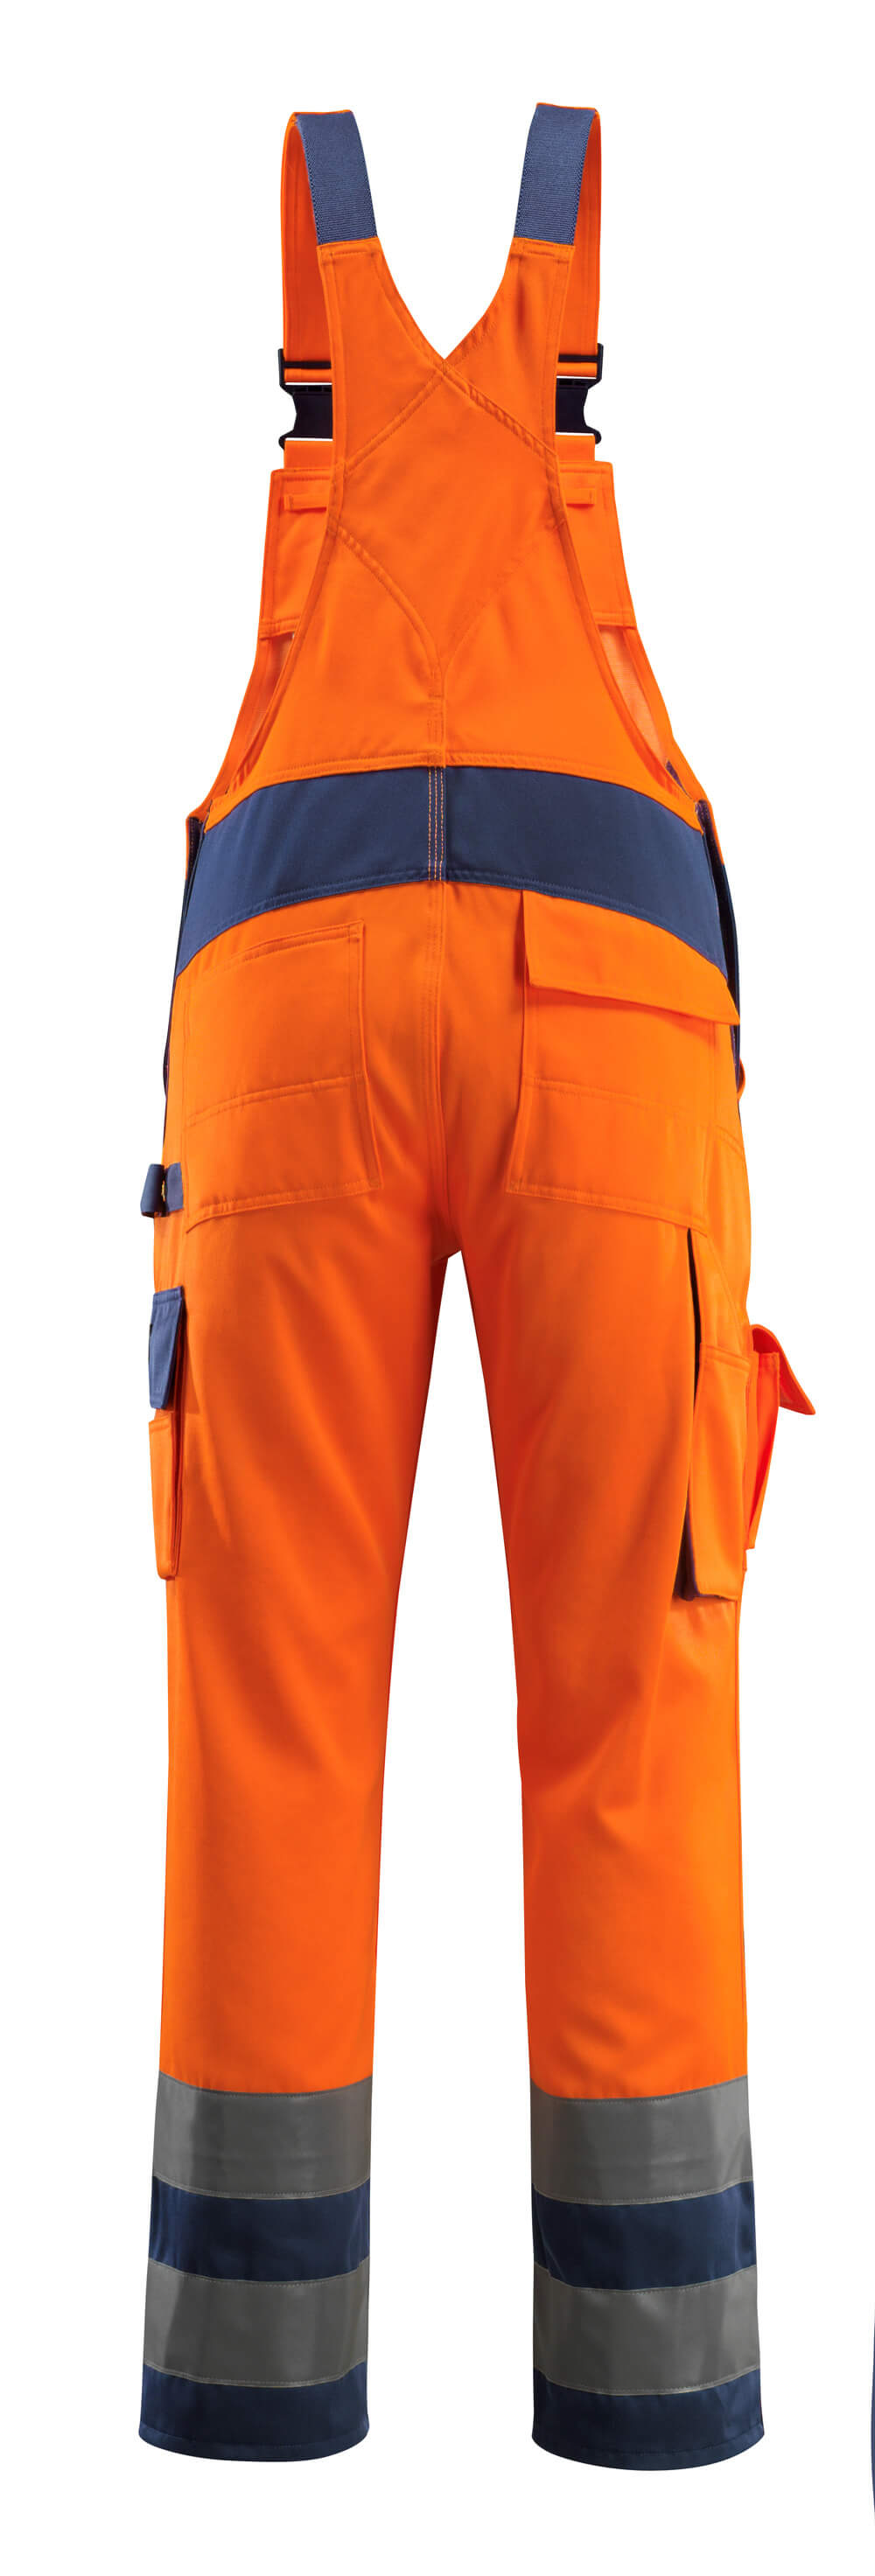 Mascot SAFE COMPETE  Barras Bib & Brace with kneepad pockets 07169 hi-vis orange/navy